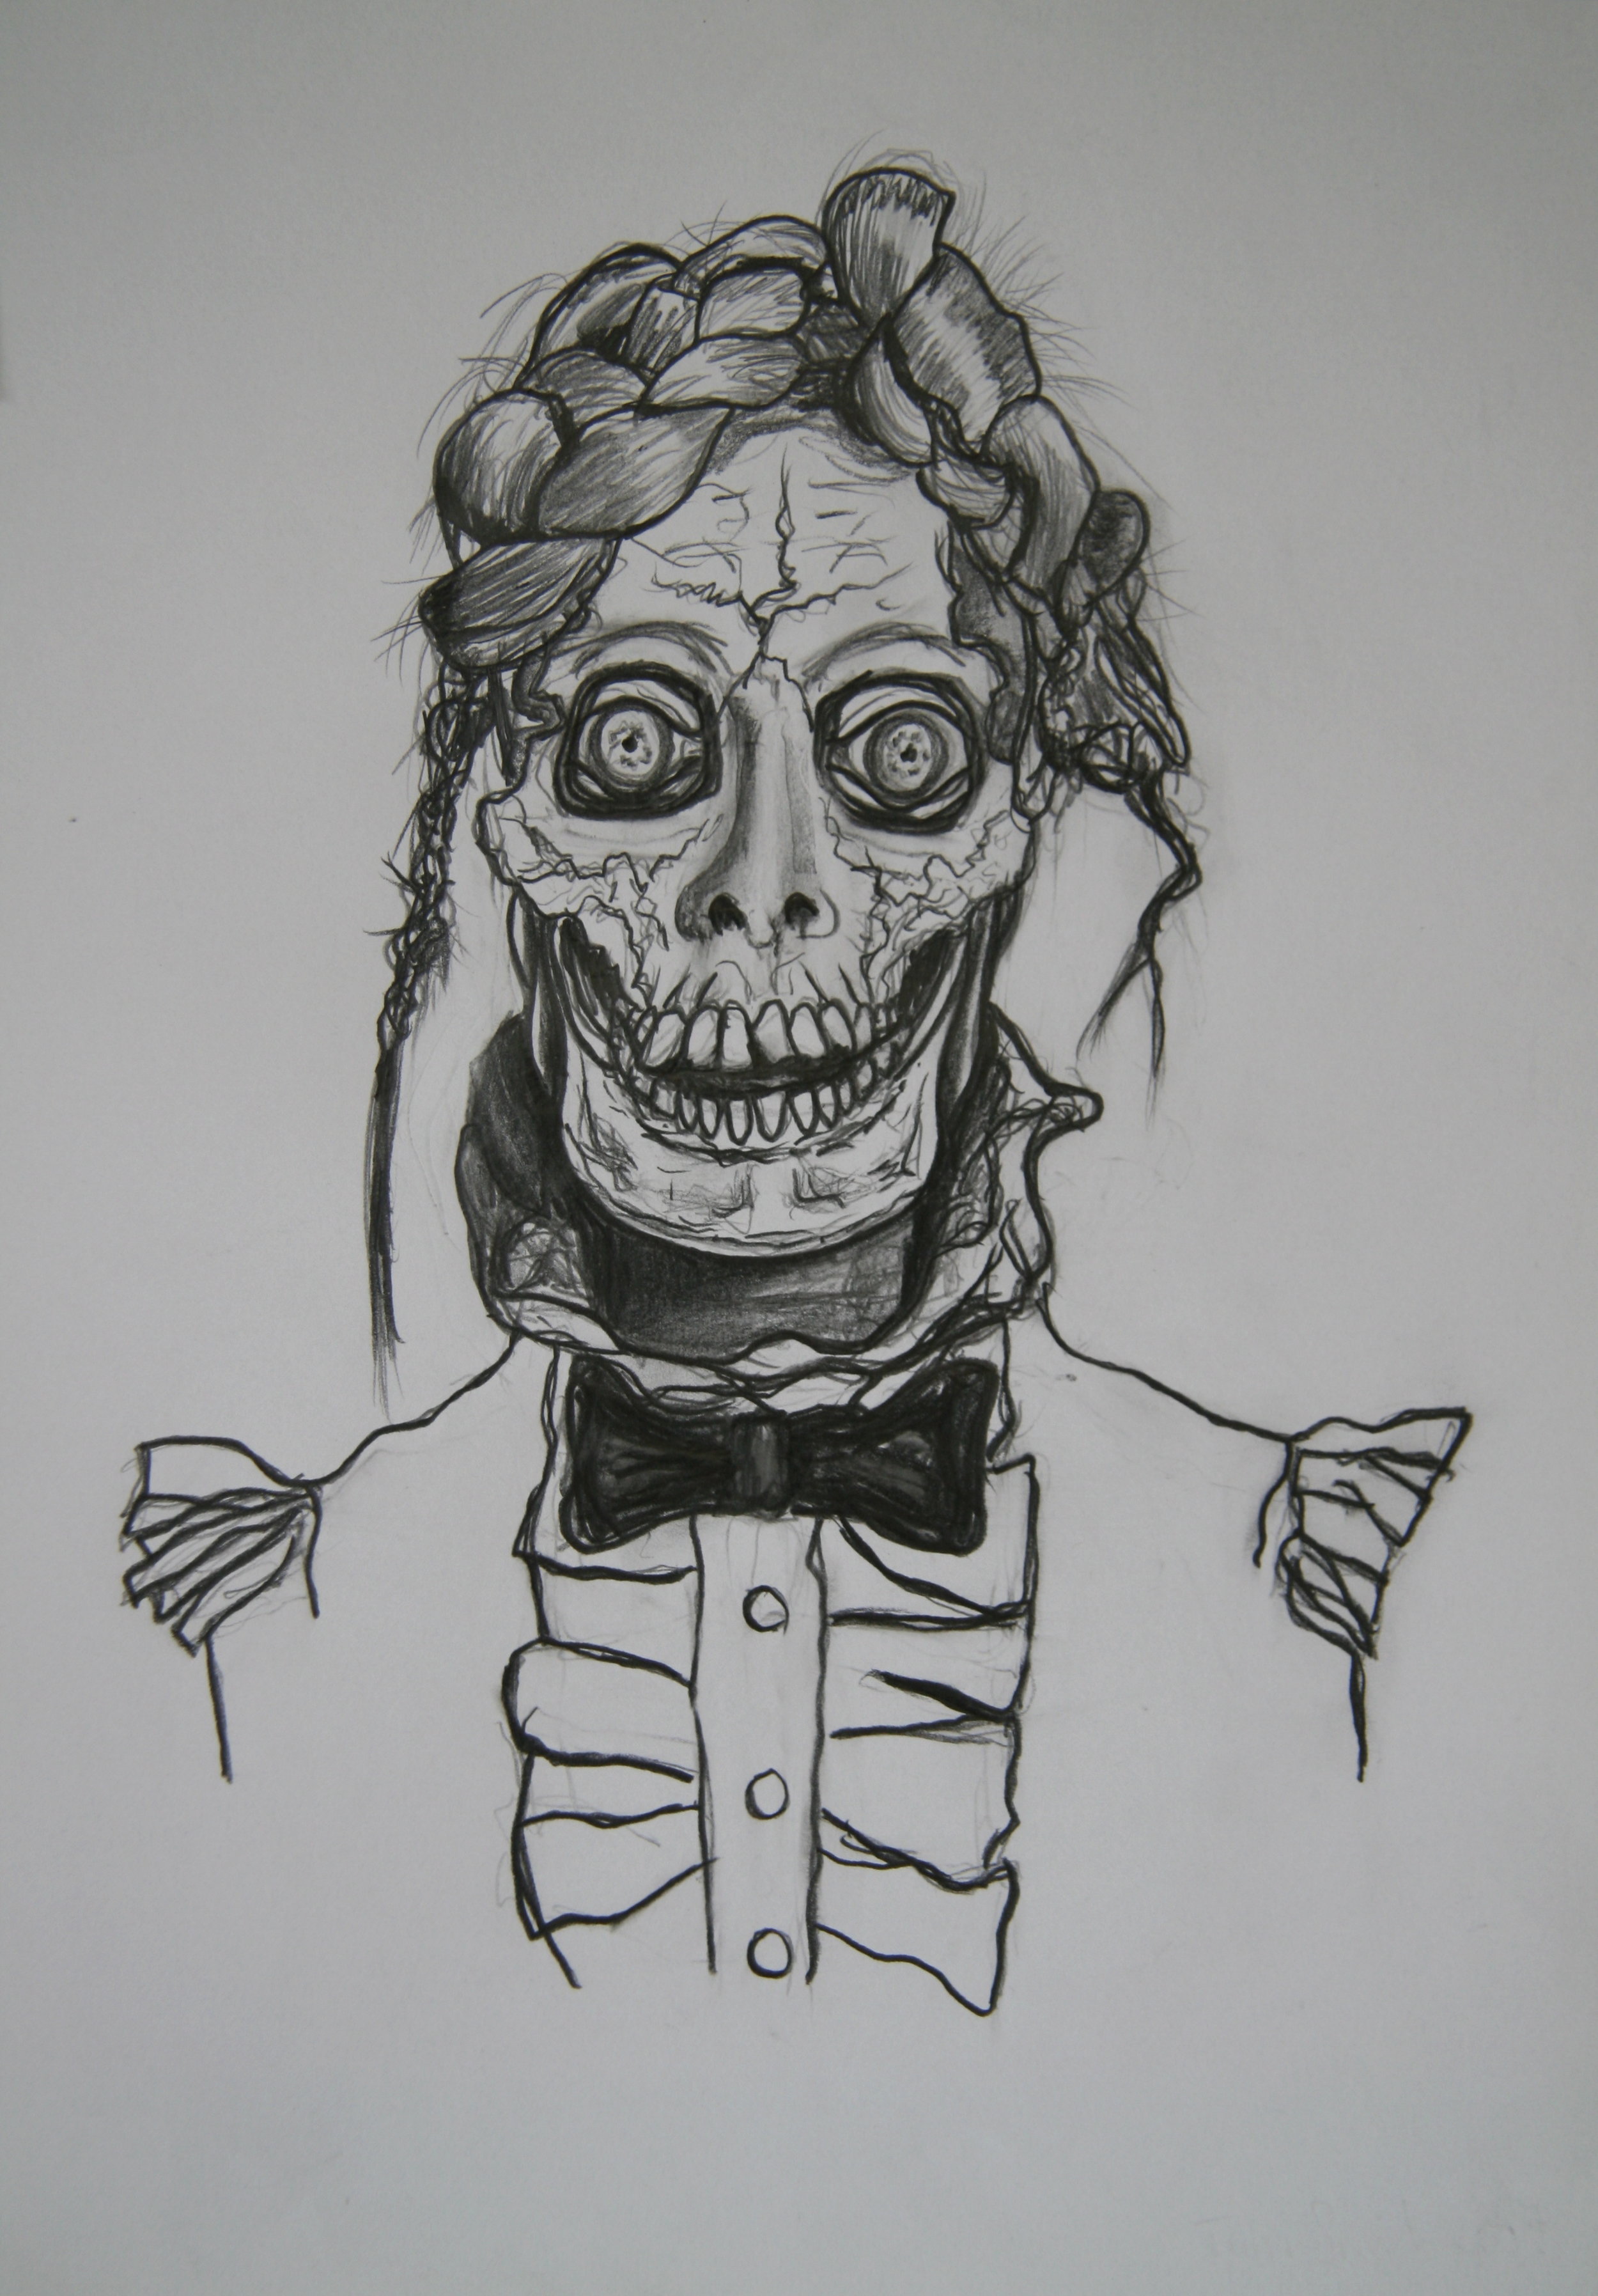 Skull 14, 30x21cm, pencil on paper